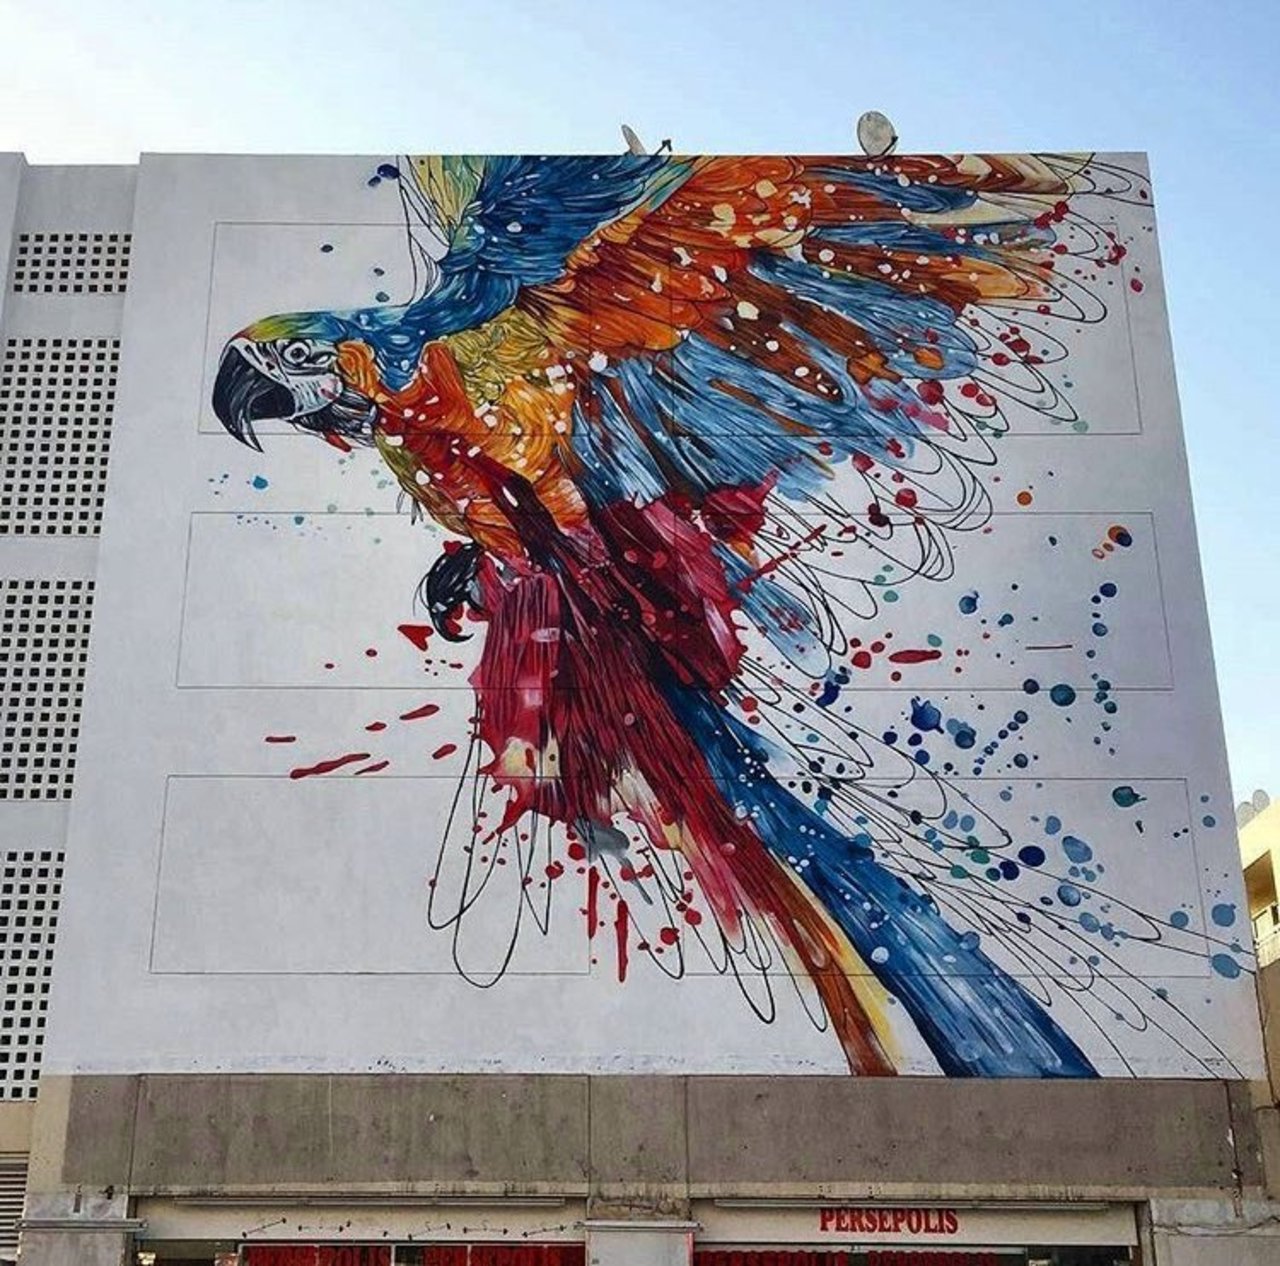 New Street Art by Katun & yumzone found in Dubai #art #graffiti #mural #streetart https://t.co/be4Ar7mrZo